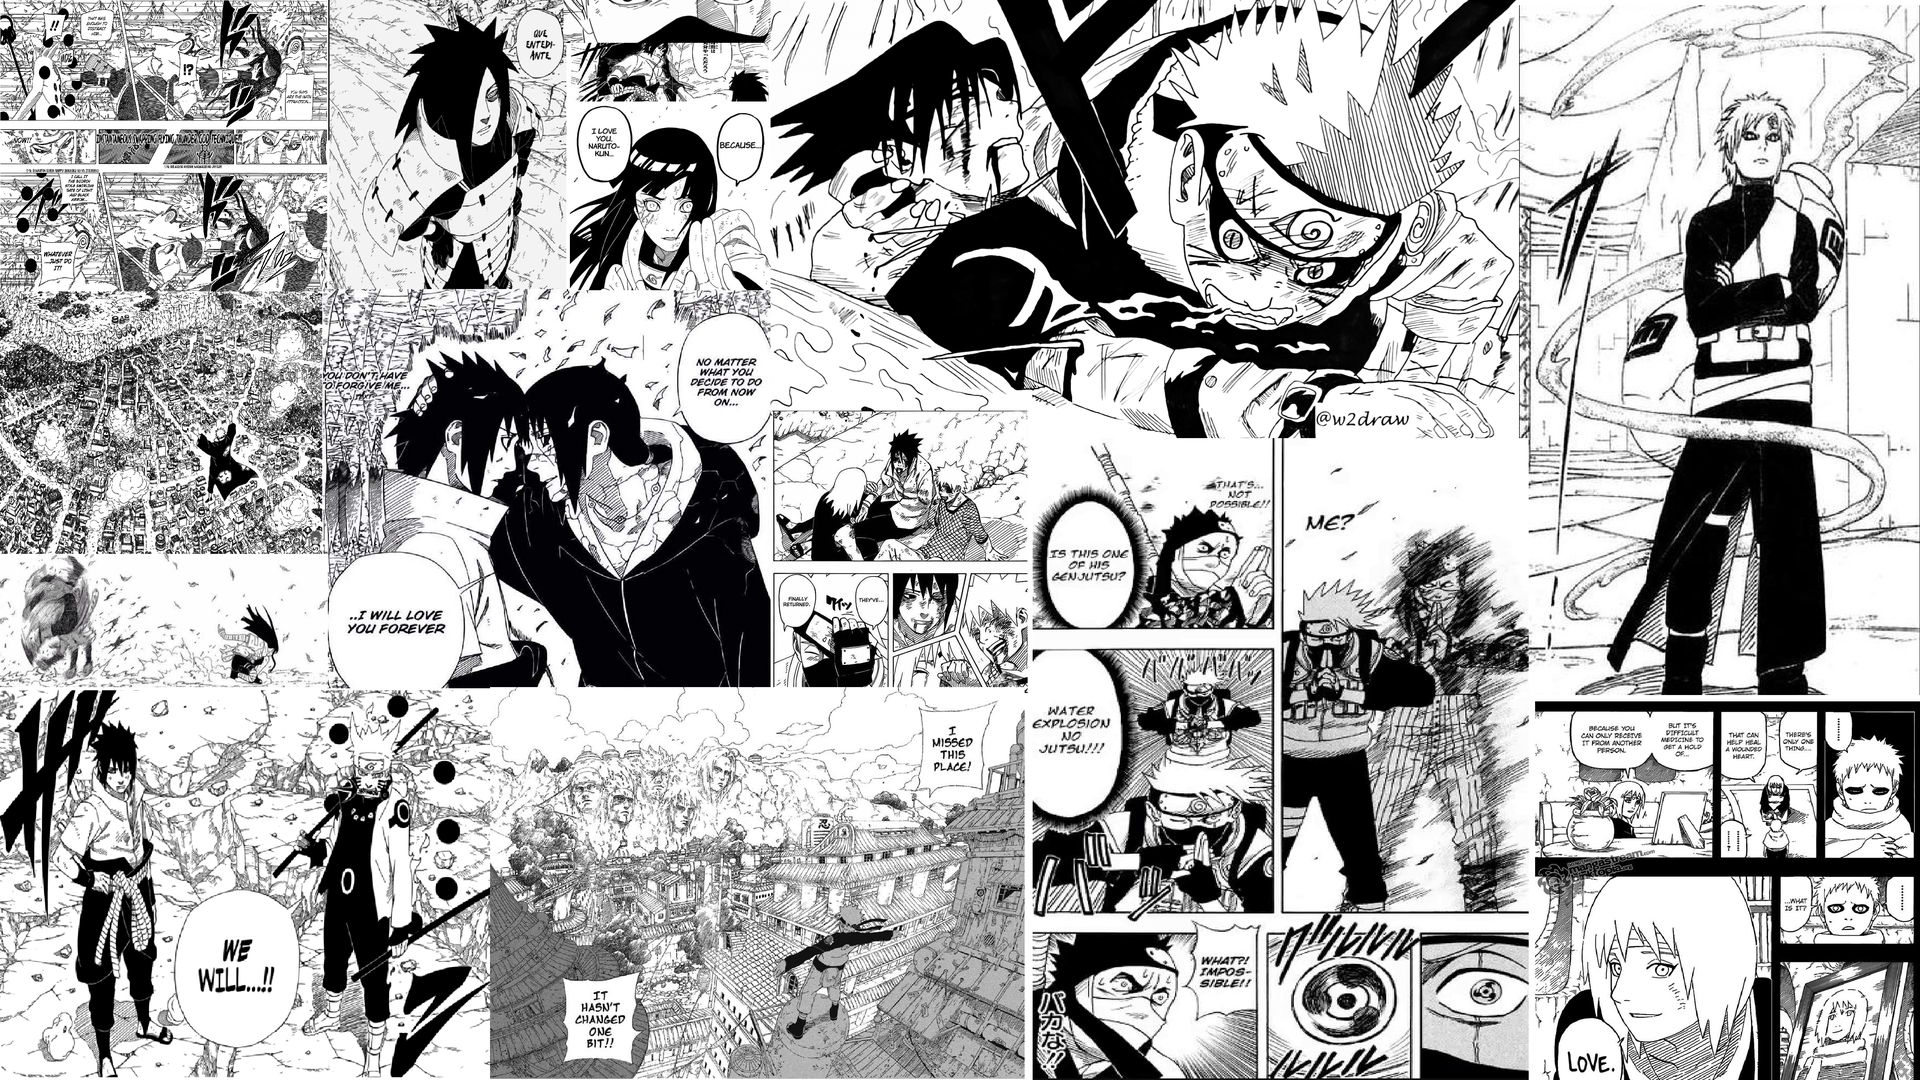 More Naruto Manga Panel Wallpaper! :D [1920 x 1080]